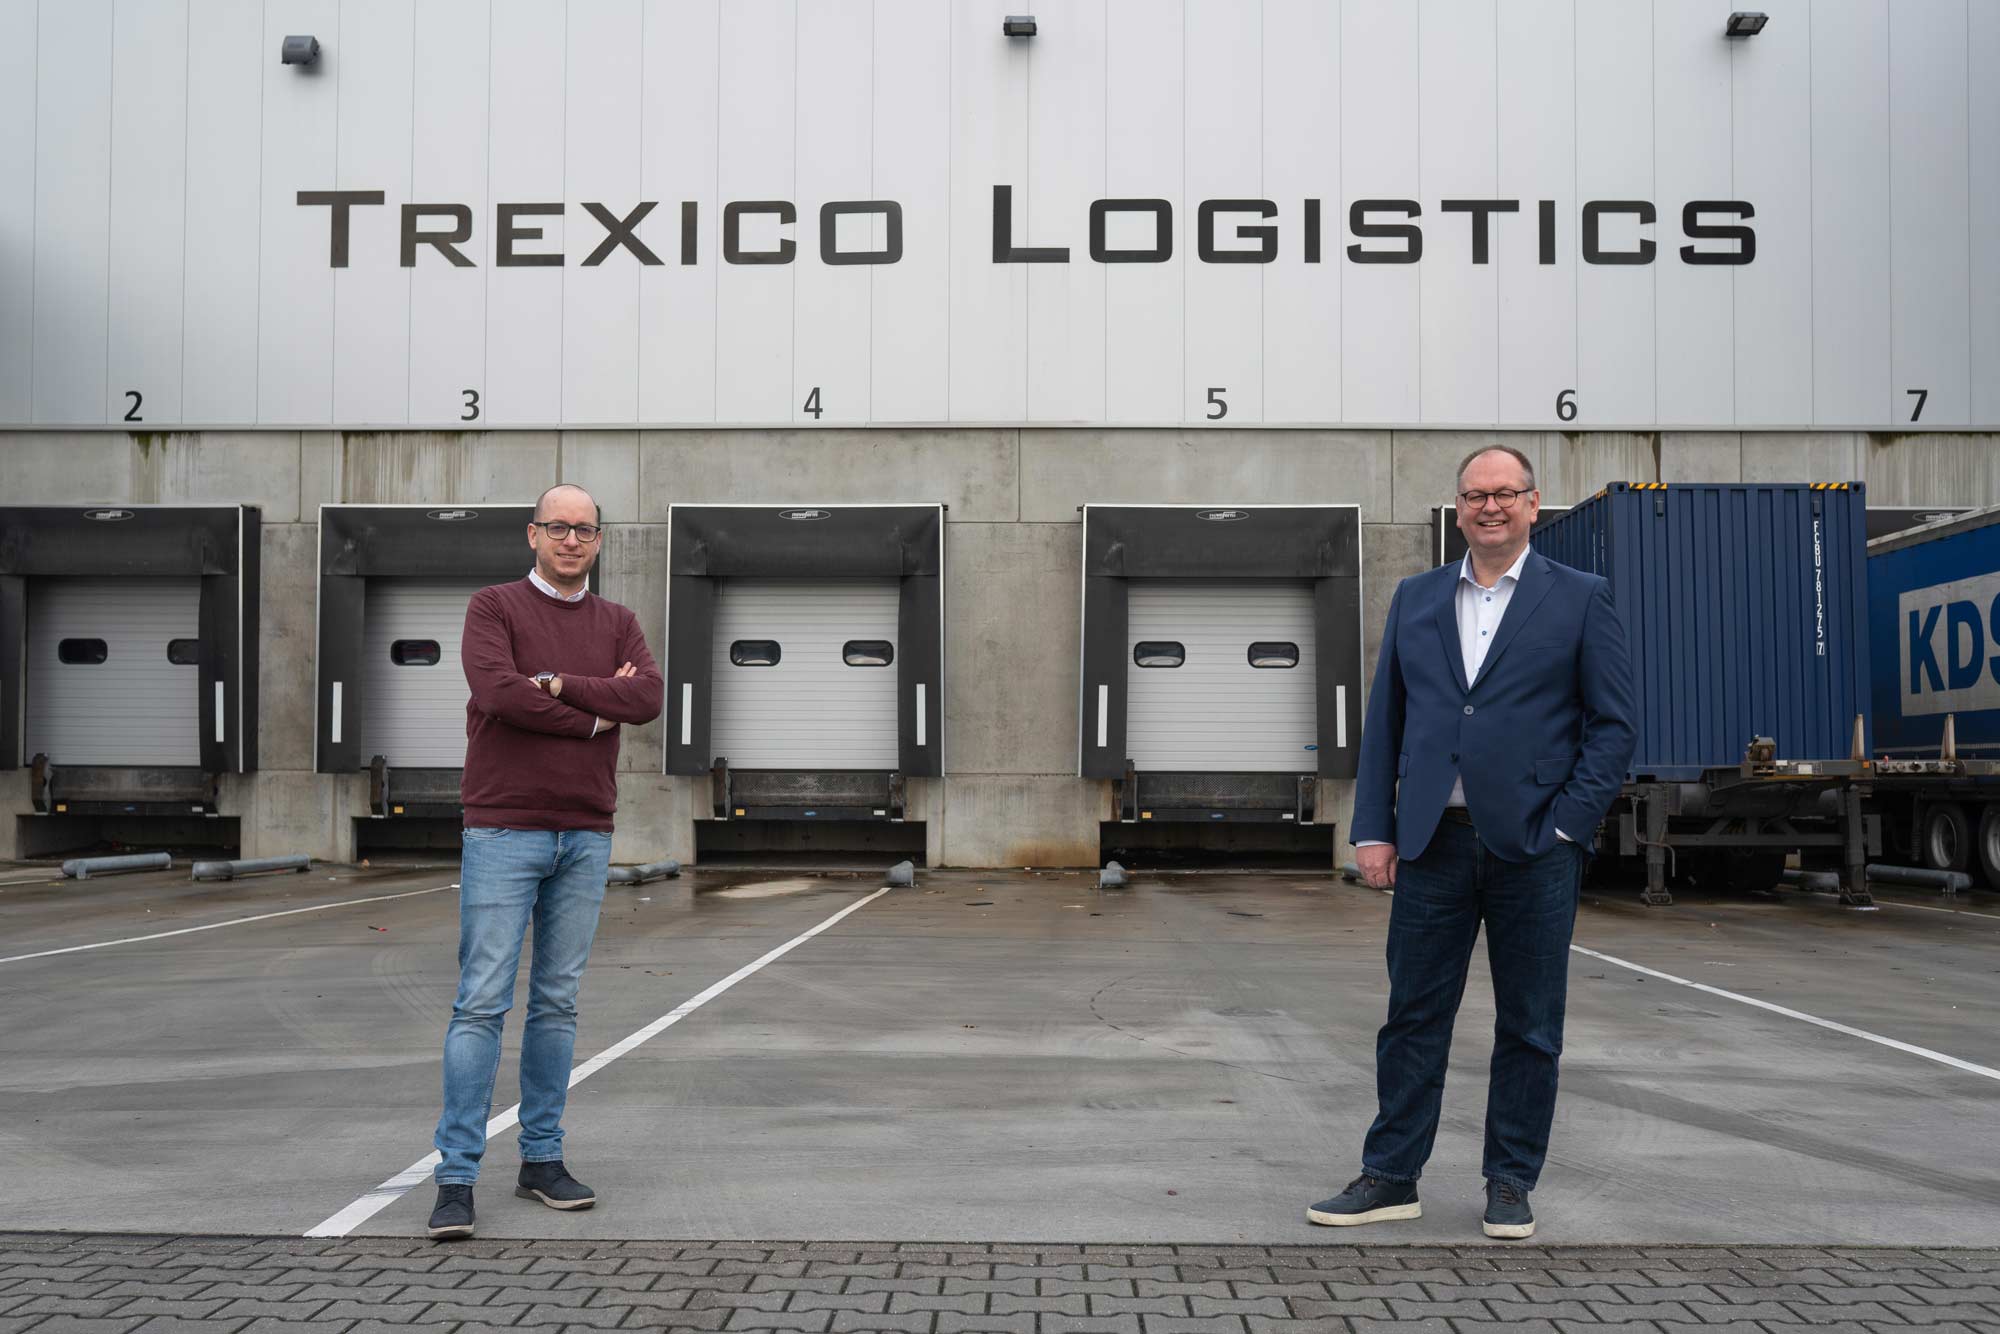 Trexico logistics